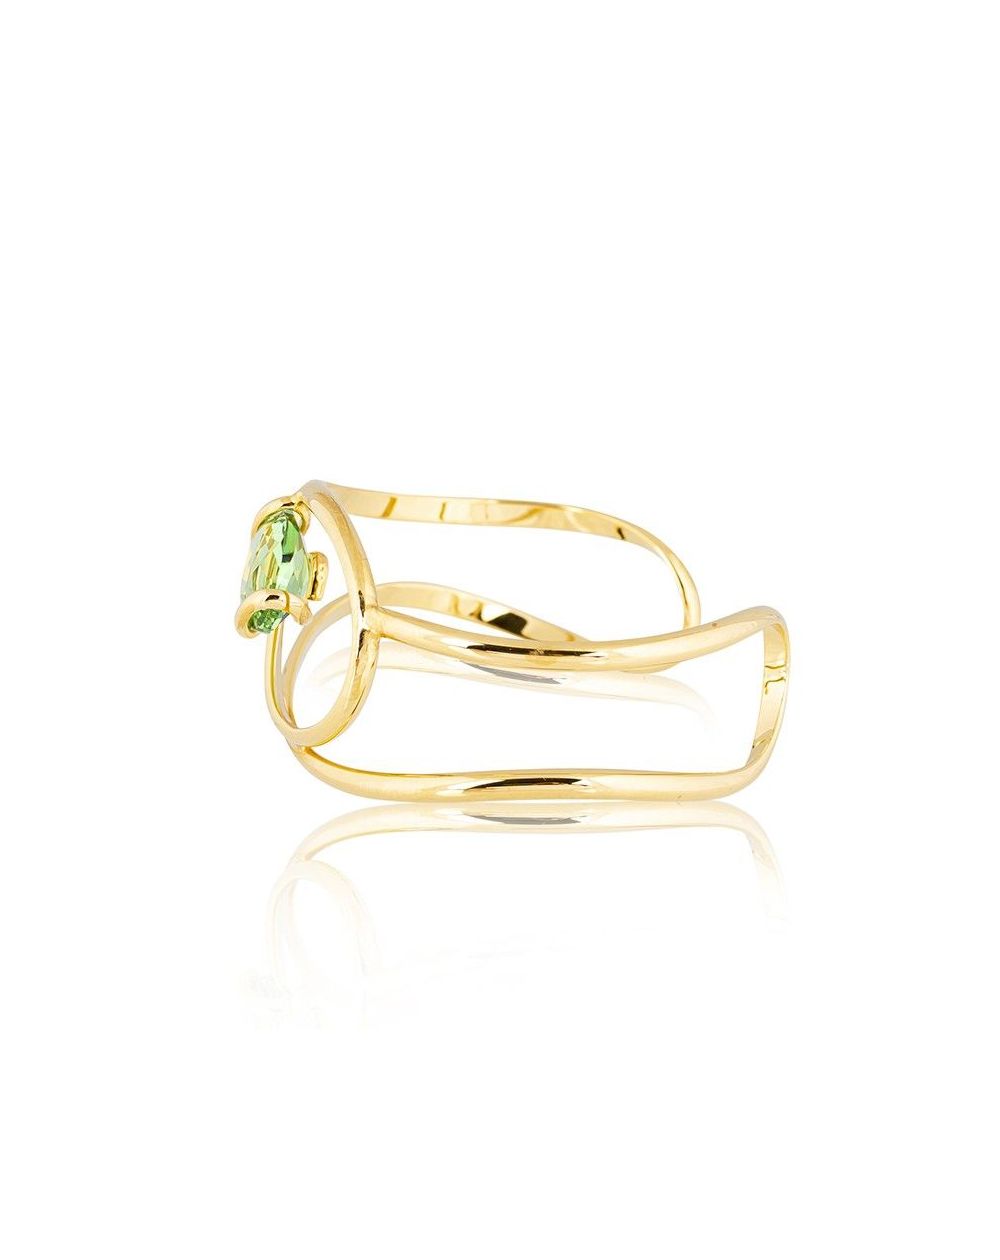 Andrea Marazzini bijoux - Bracelet cristal Swarovski Pear Peridot